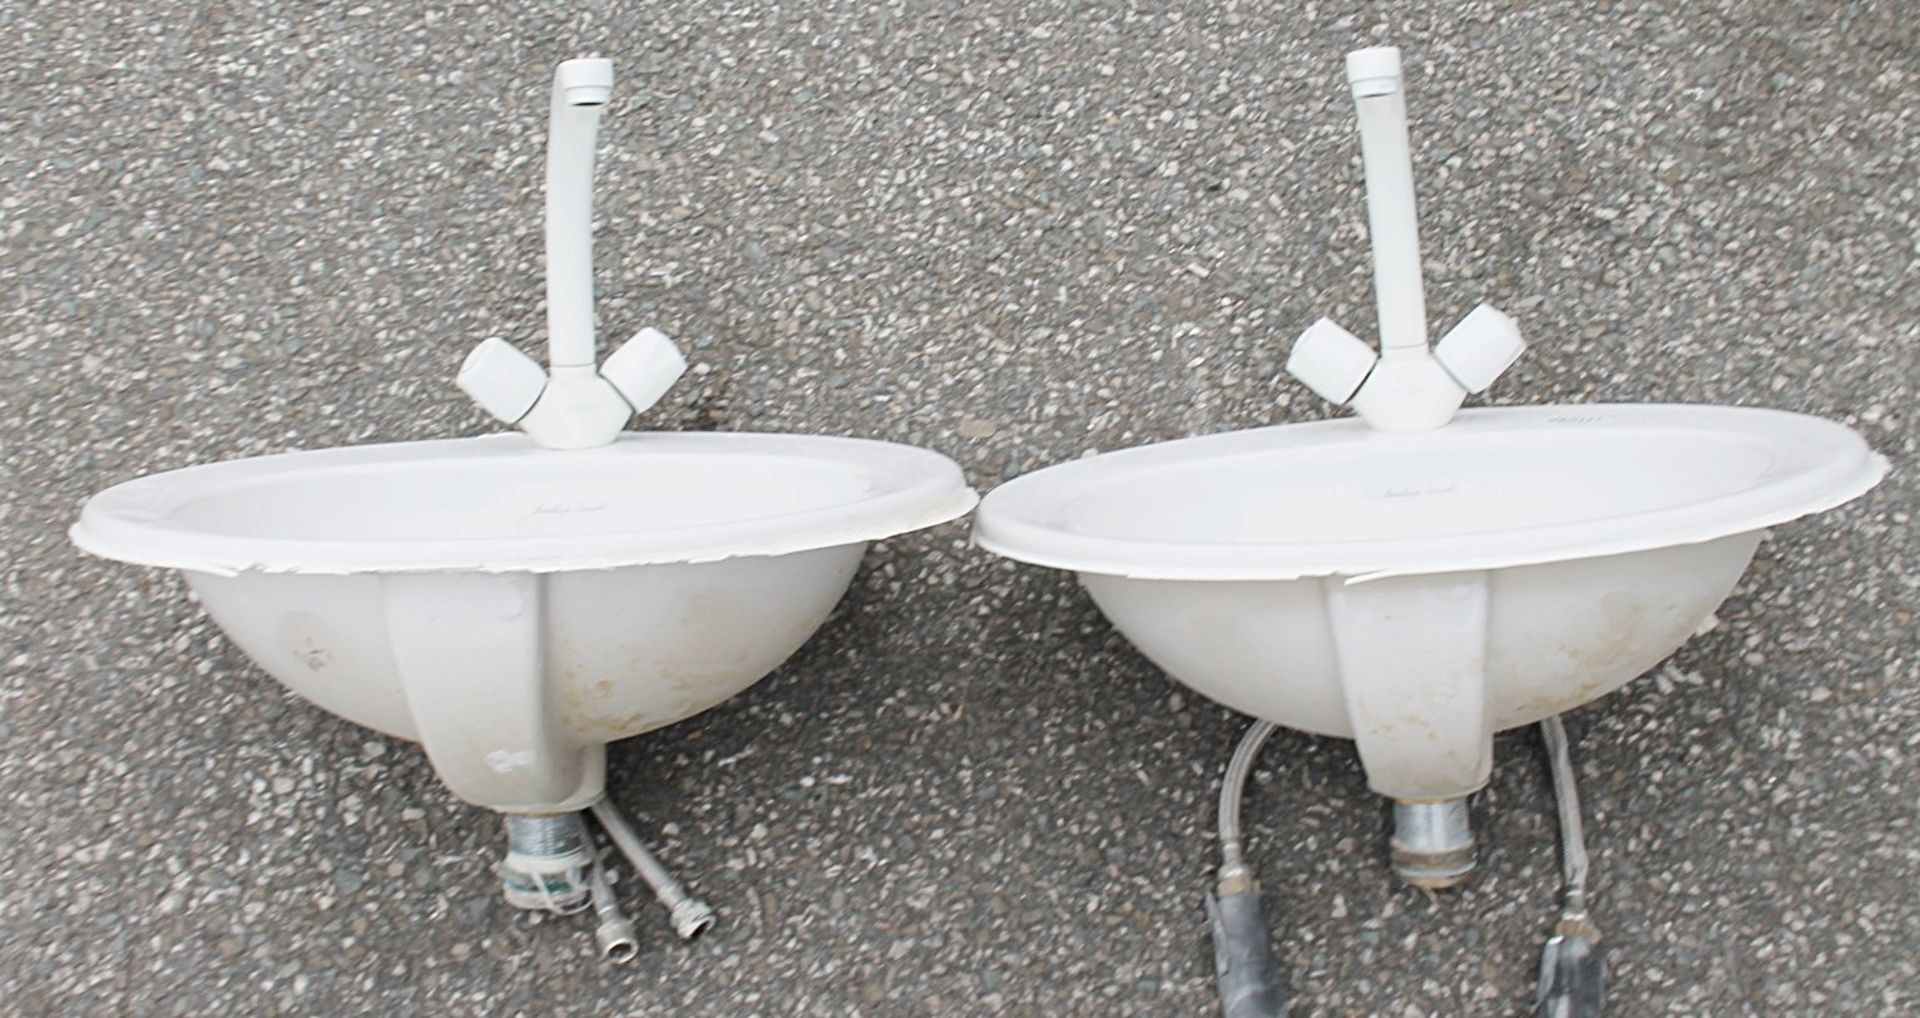 2 x Armitage Shanks Sink Basins With White Taps - Prestigious Shop Fittings - Ref: GEN121/G-IT - - Image 4 of 4